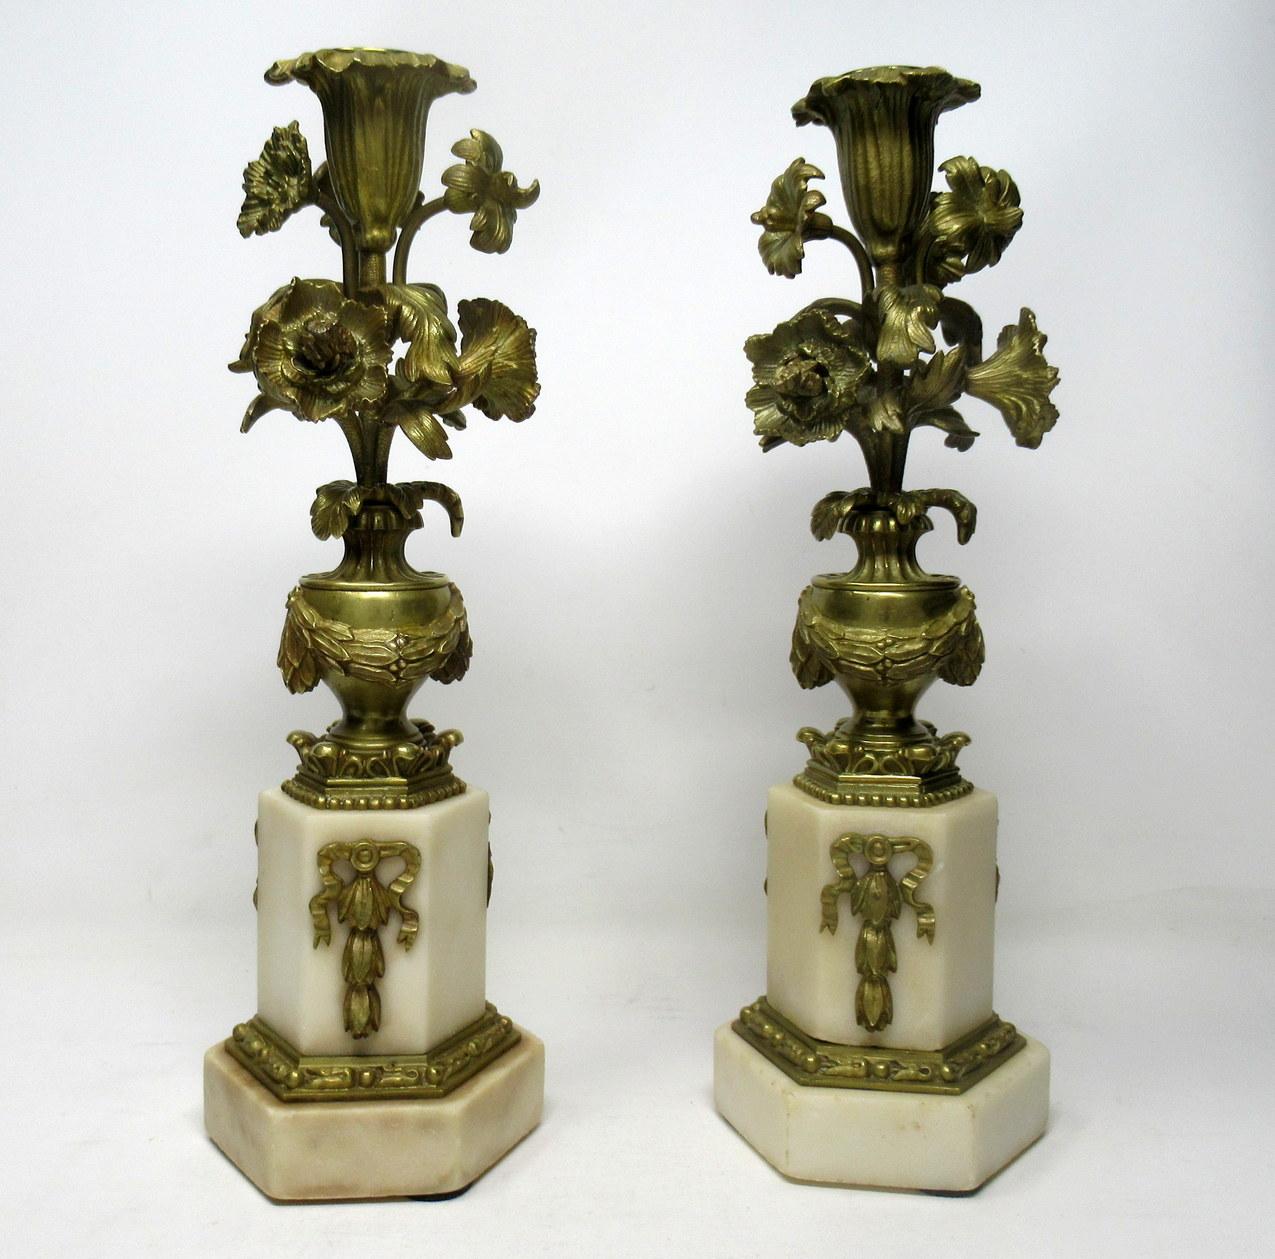 Grand Tour Antique Pair of French Ormolu Bronze Marble Candlesticks Candelabra Cream Gold  